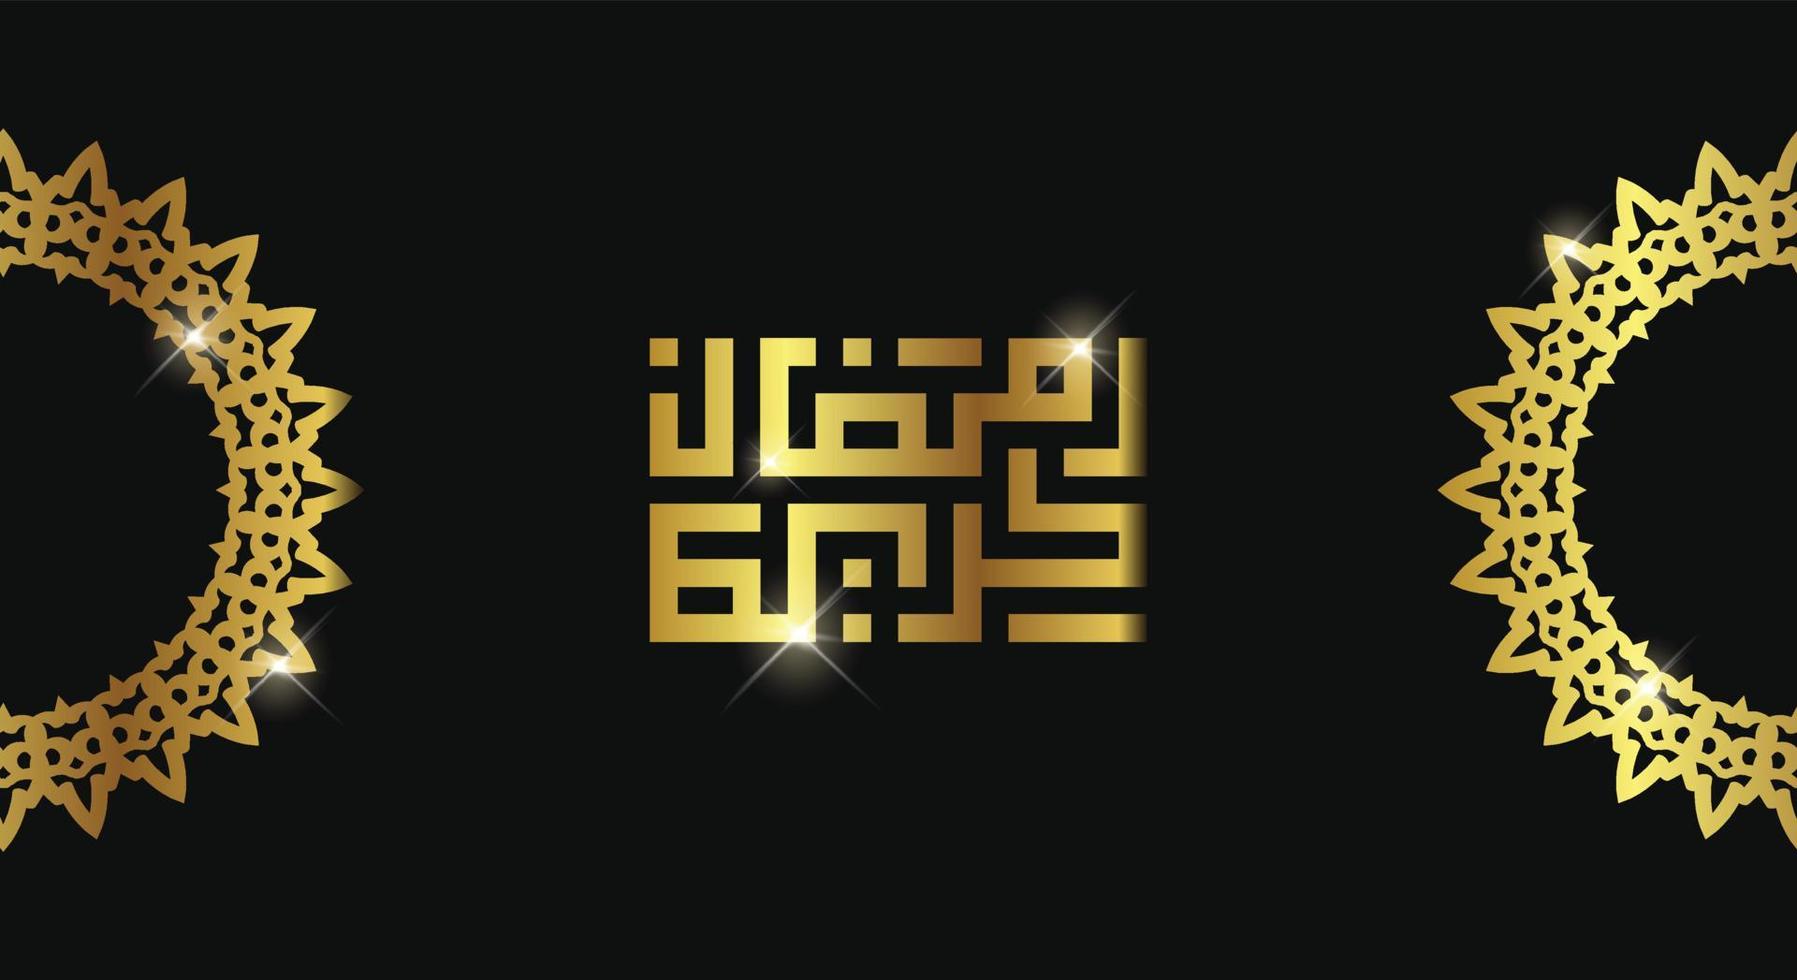 ramadan kareem calligraphie arabe fond illustration vectorielle vecteur